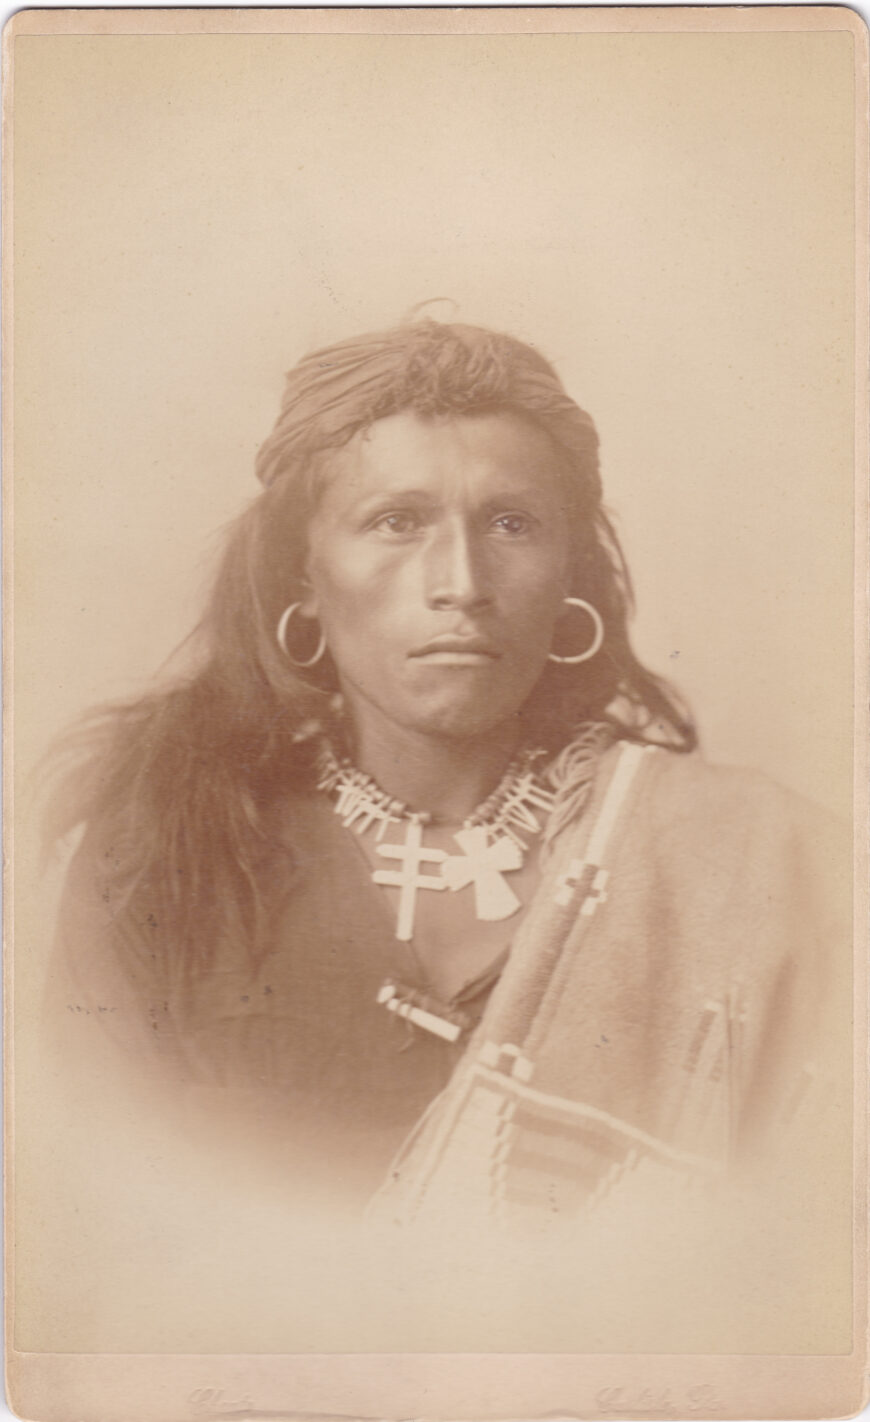 John N. Choate, Tom Torlino [version 3], 1882 (Carlisle Indian School Digital Resource Center)